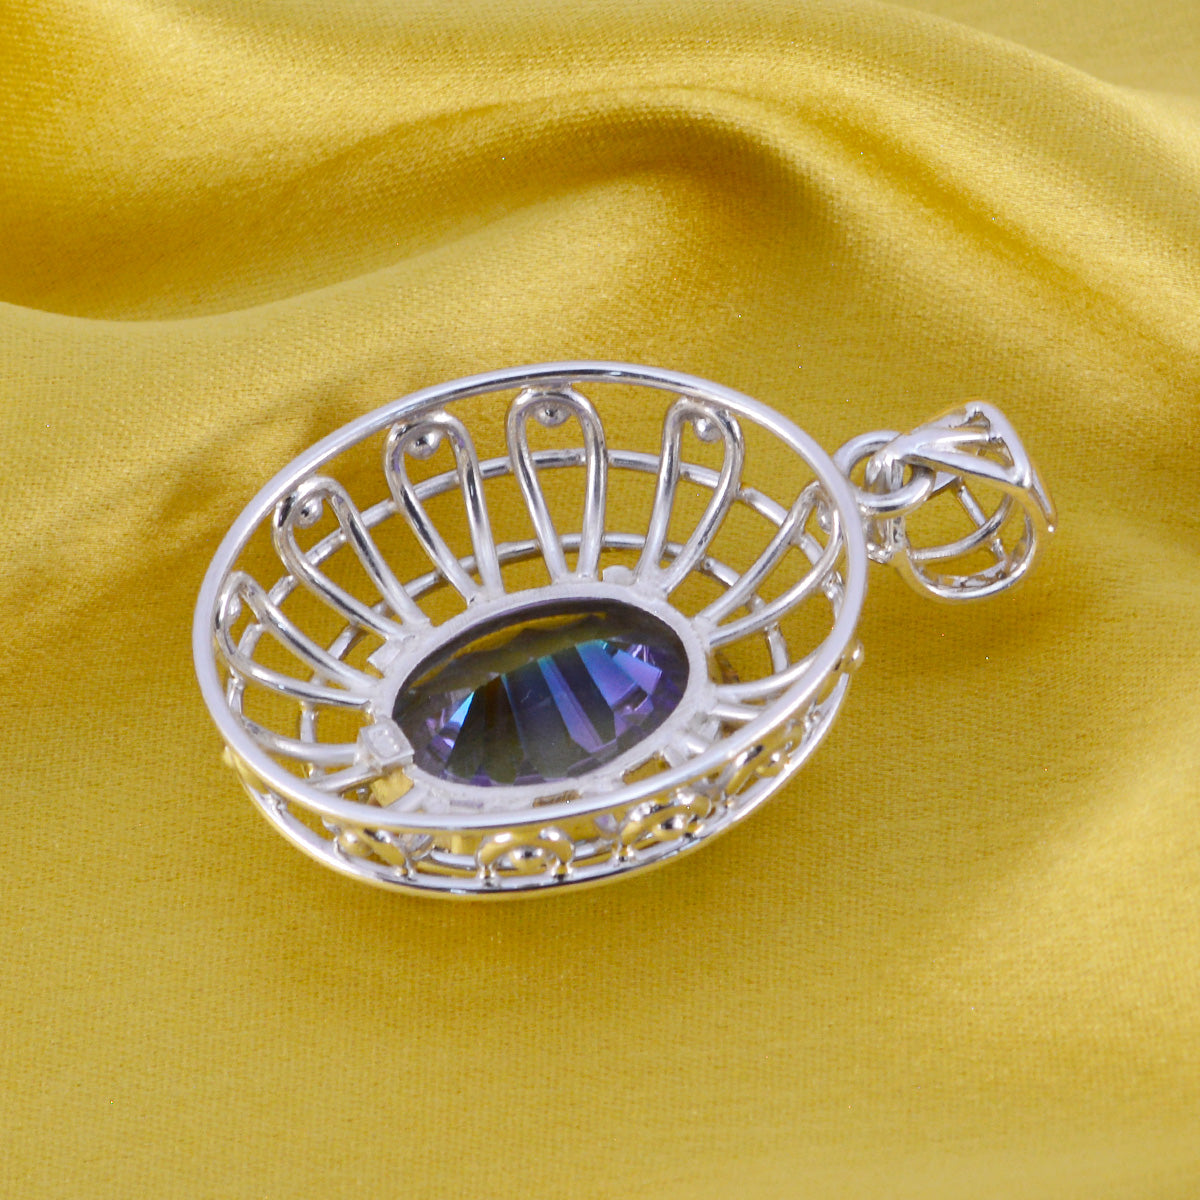 Riyo Good Gemstones Oval Faceted Multi Color Mystic Quartz Solid Silver Pendant gift for mom birthday